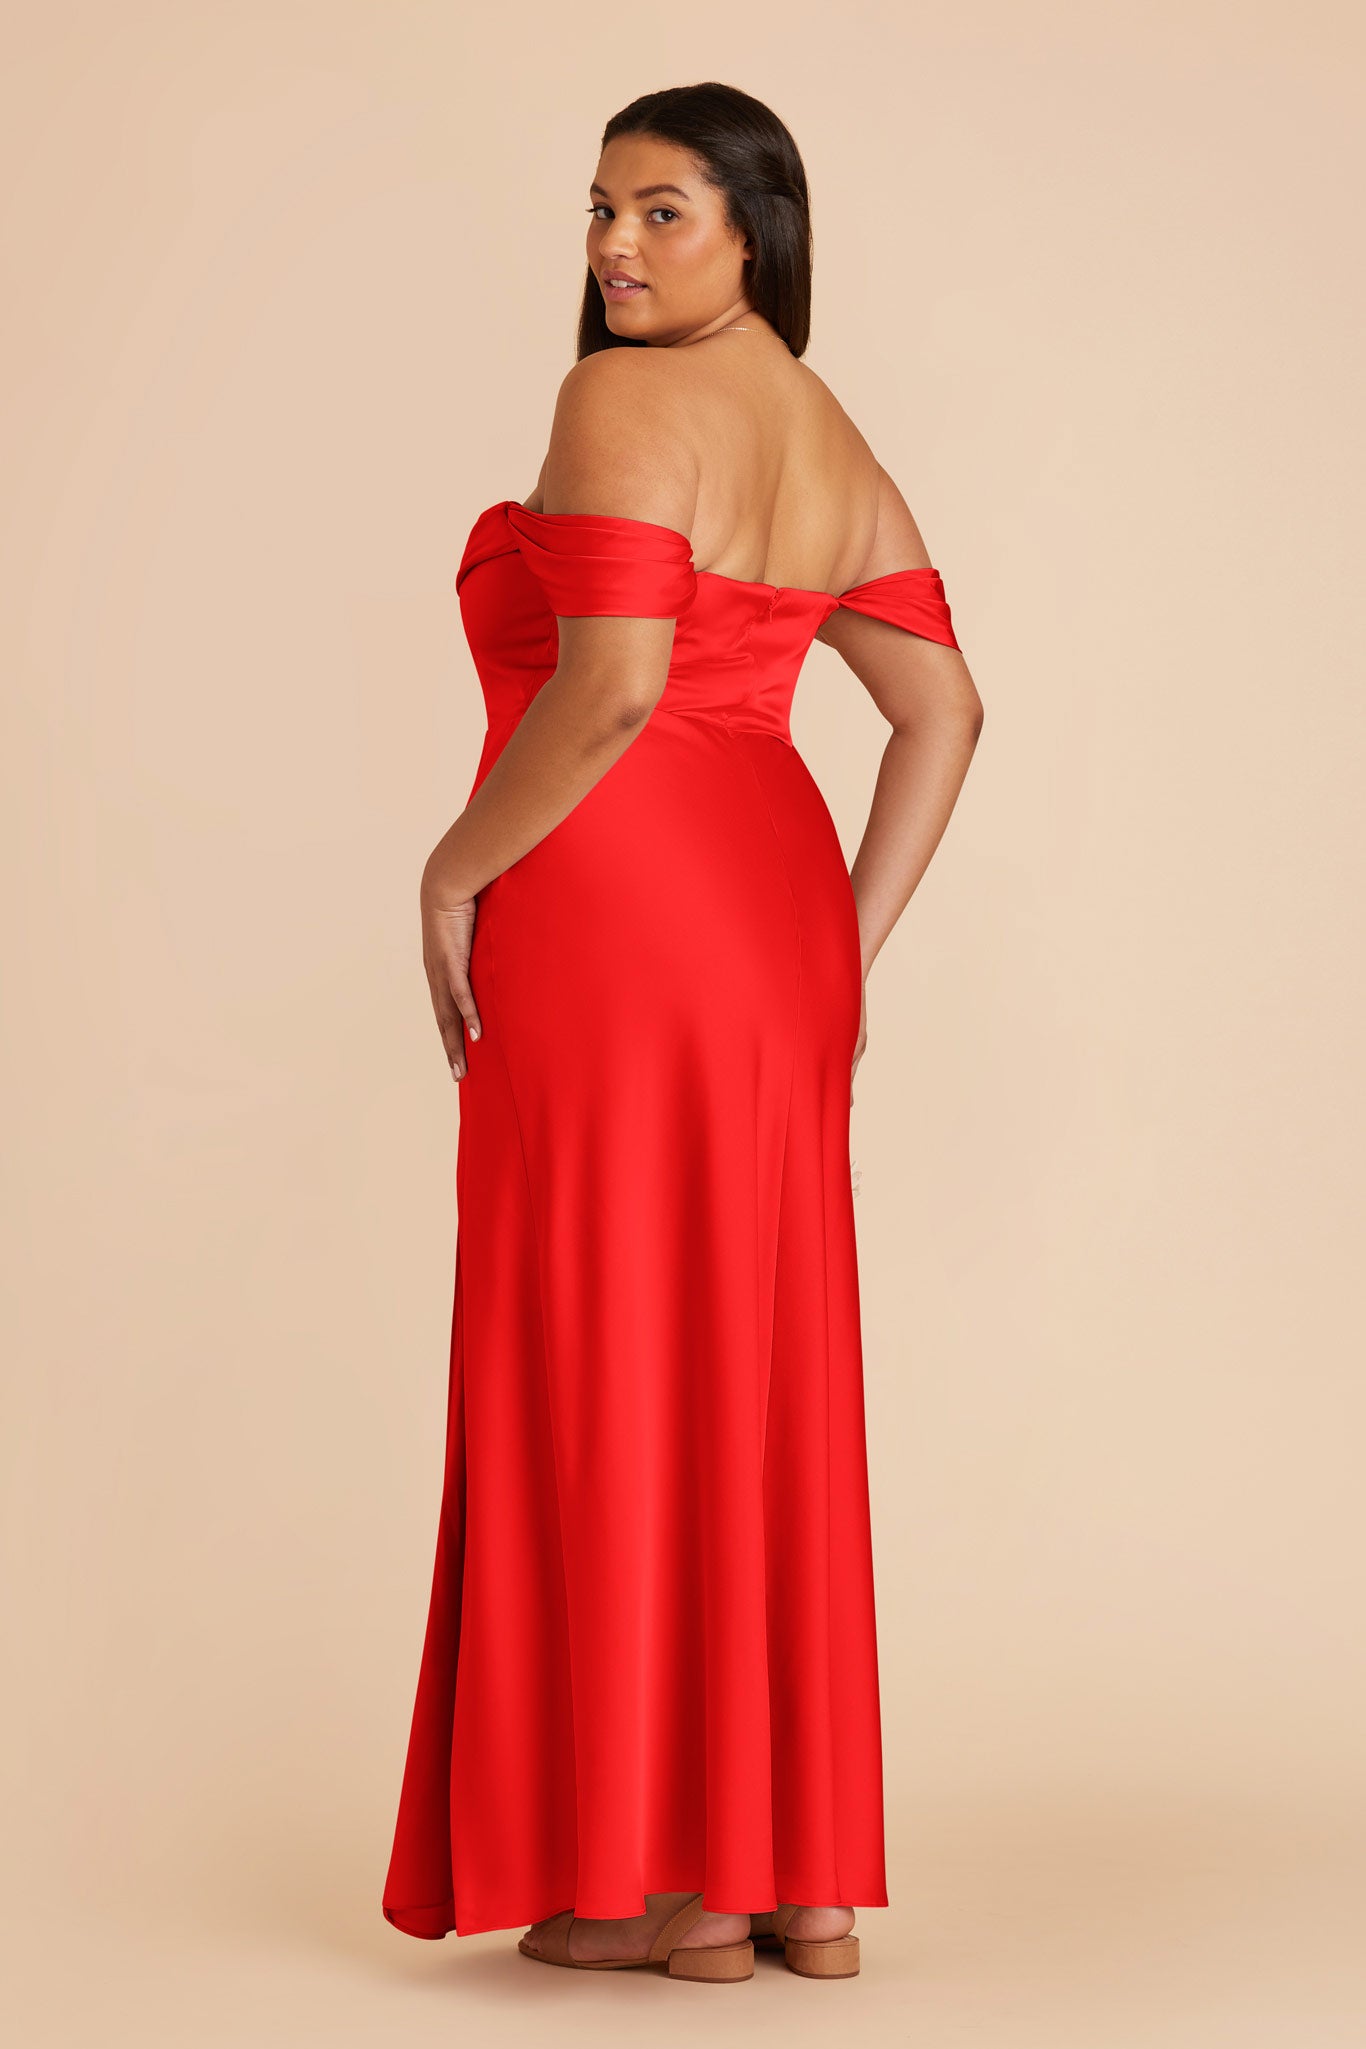 Lipstick Red Mia Matte Satin Convertible Dress by Birdy Grey